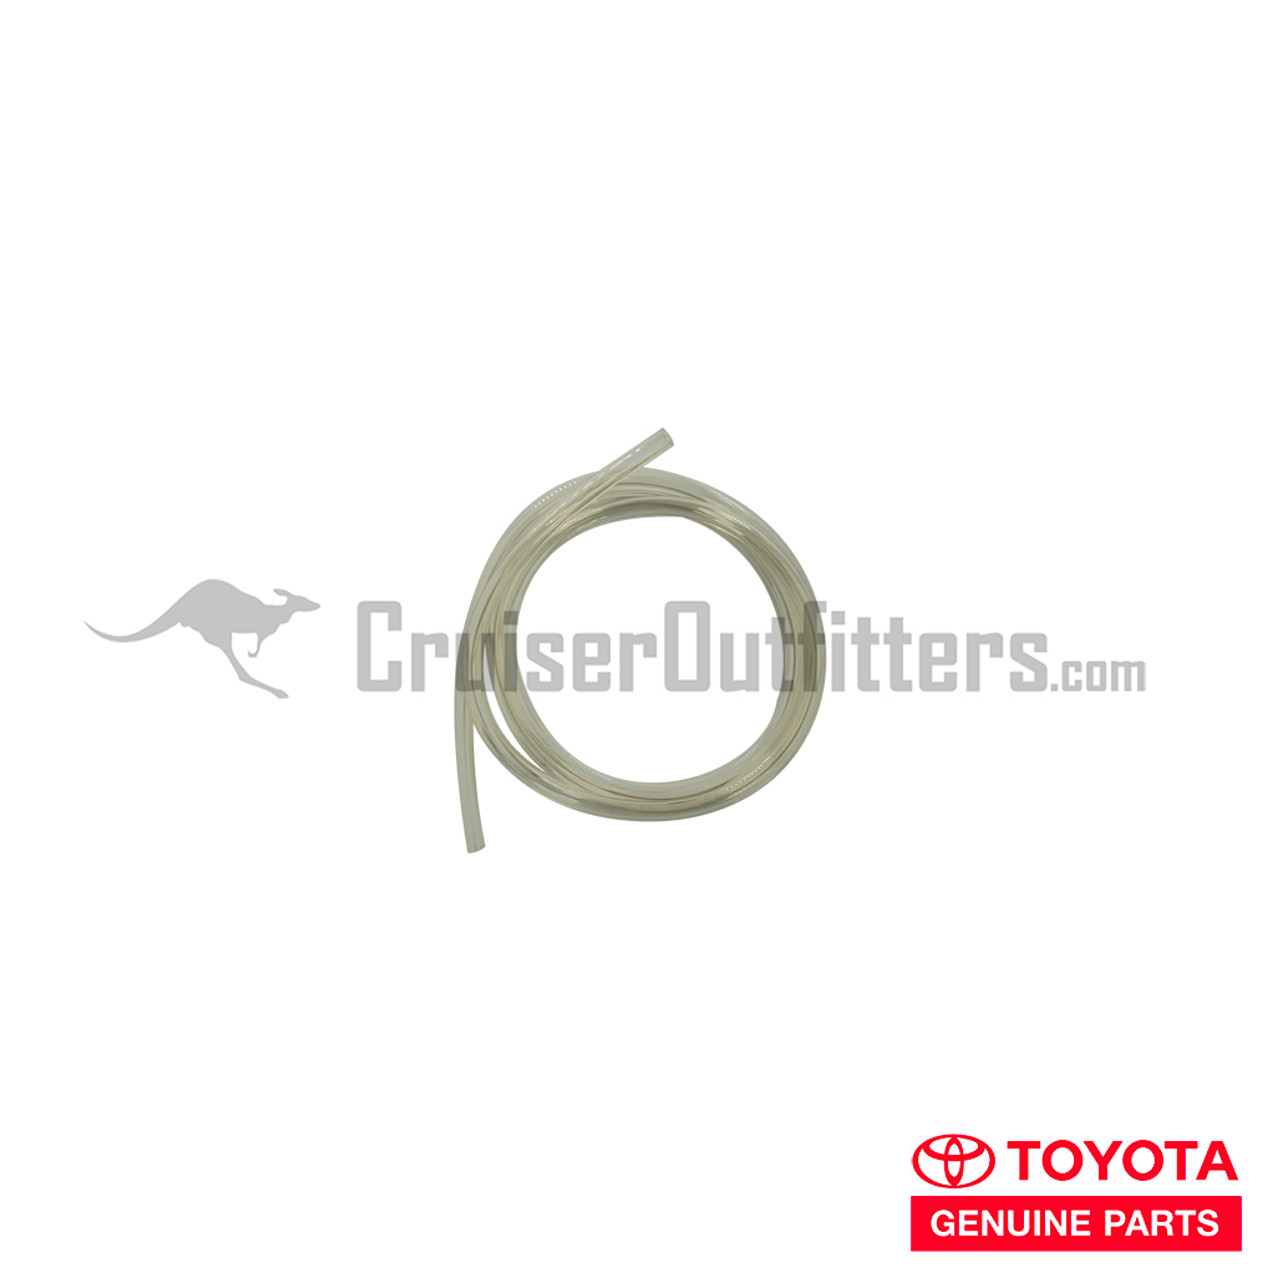 Windshield Washer Hose - OEM Toyota - Fits 40" (WIPWASH06013)